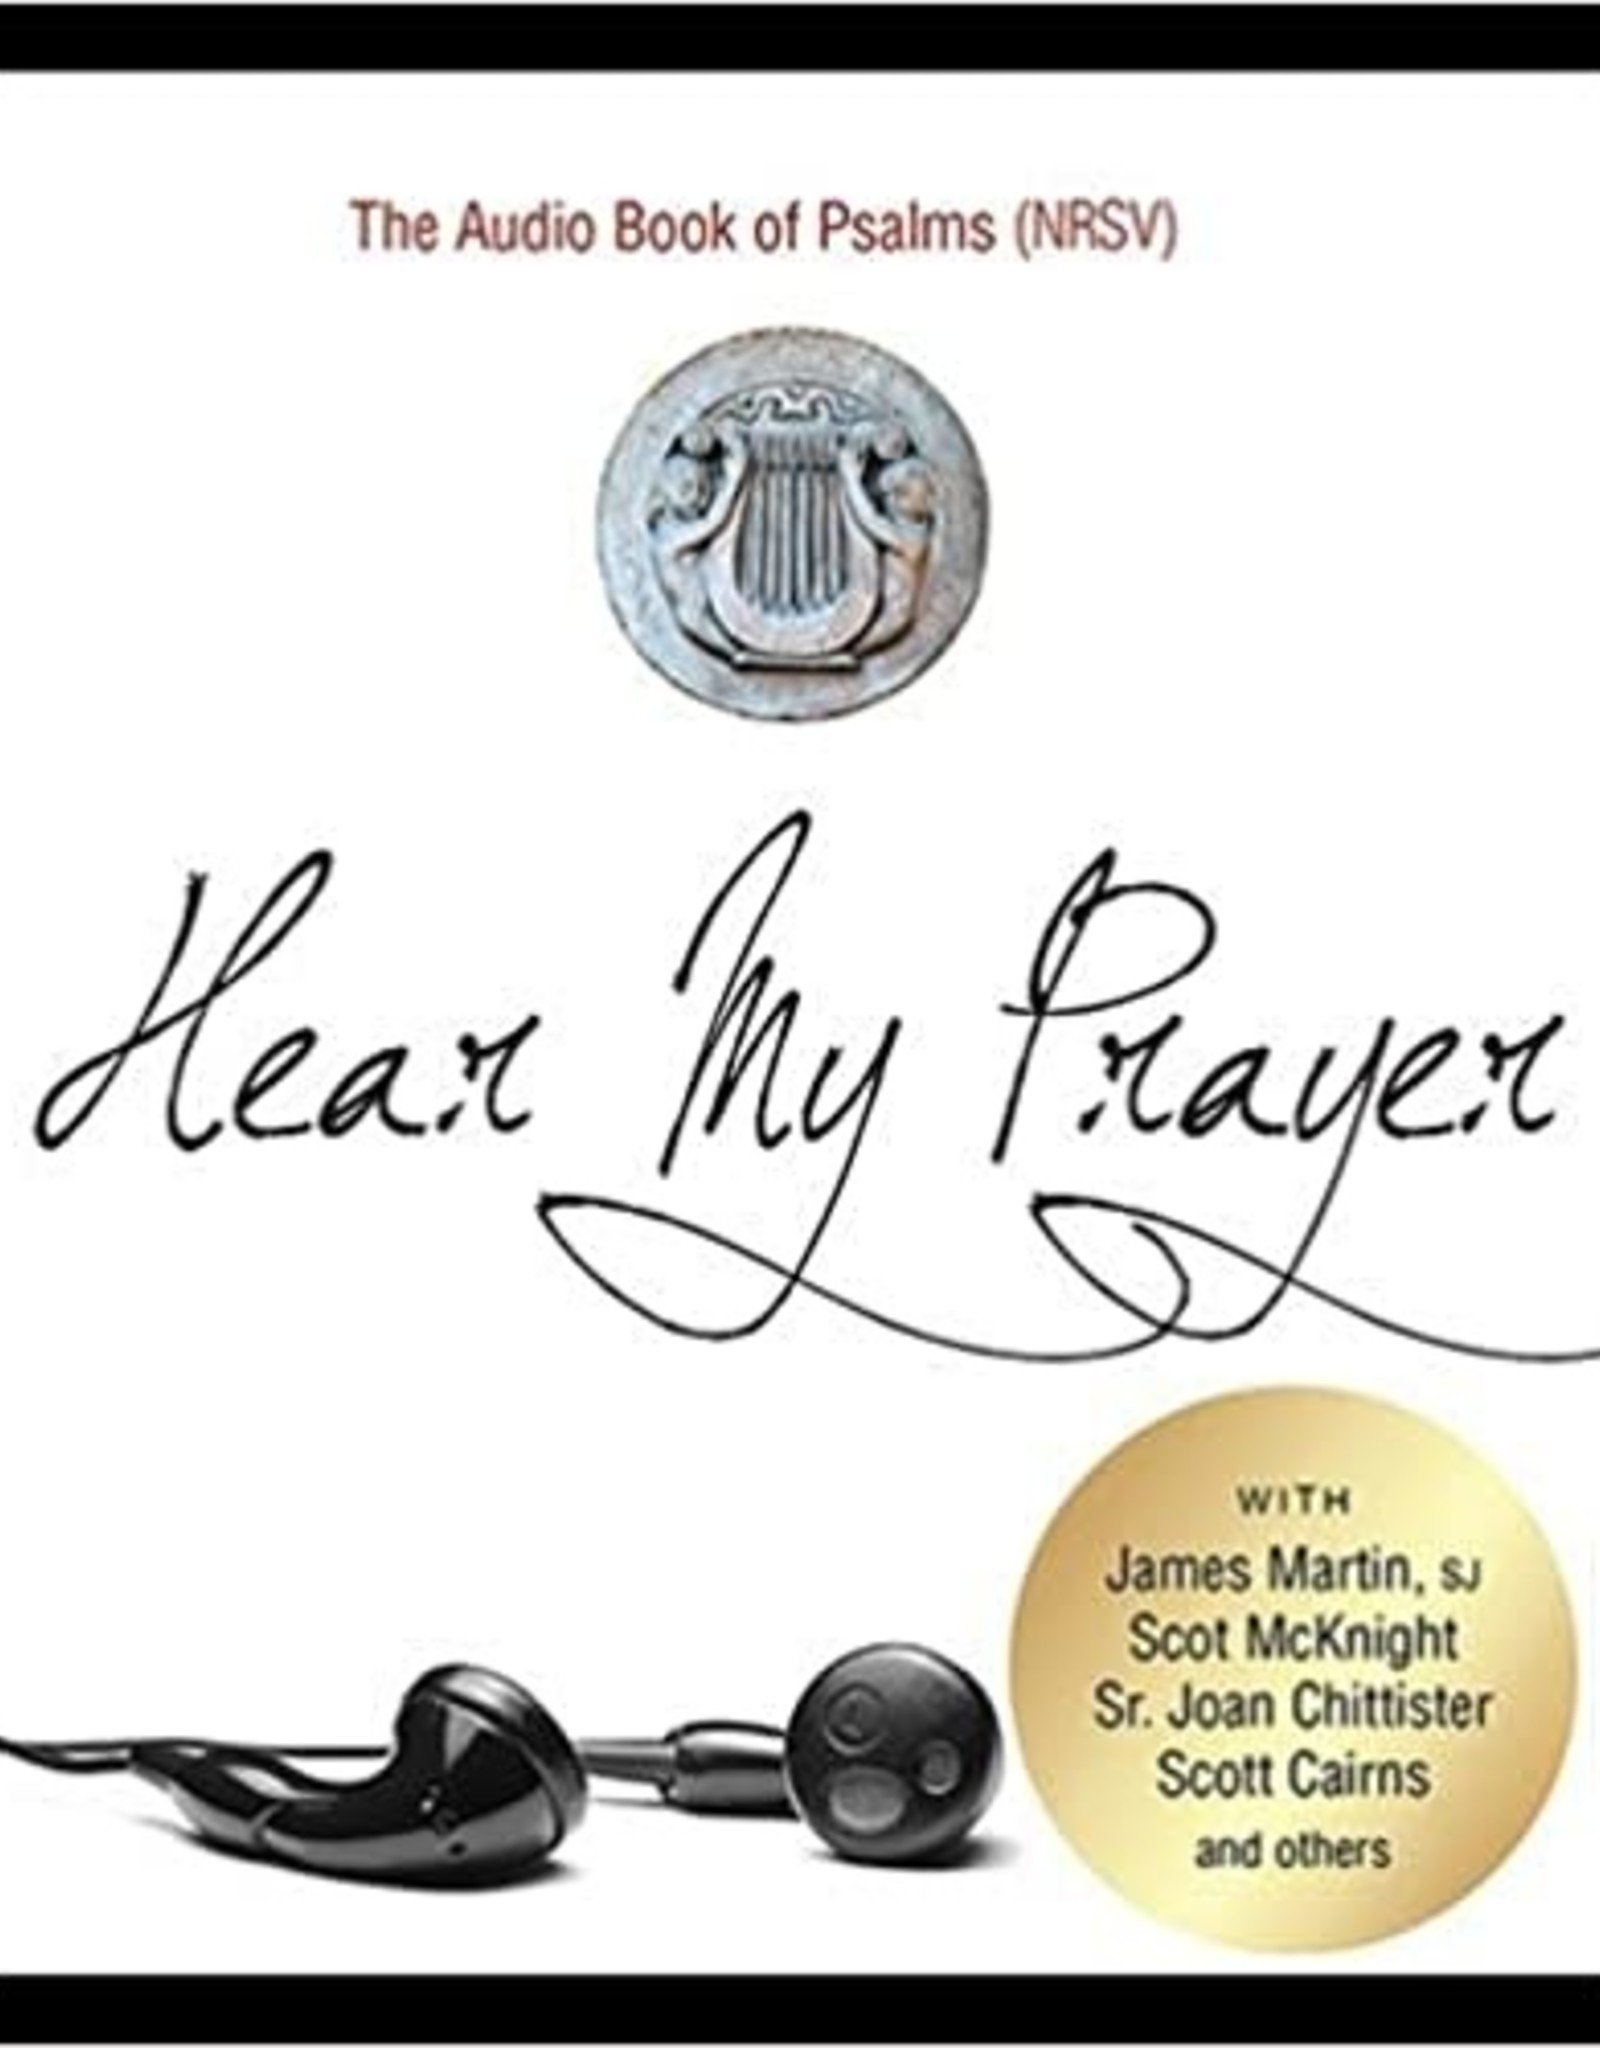 Hear My Prayer: The Audio Book of Psalms (NRSV) Audio CD